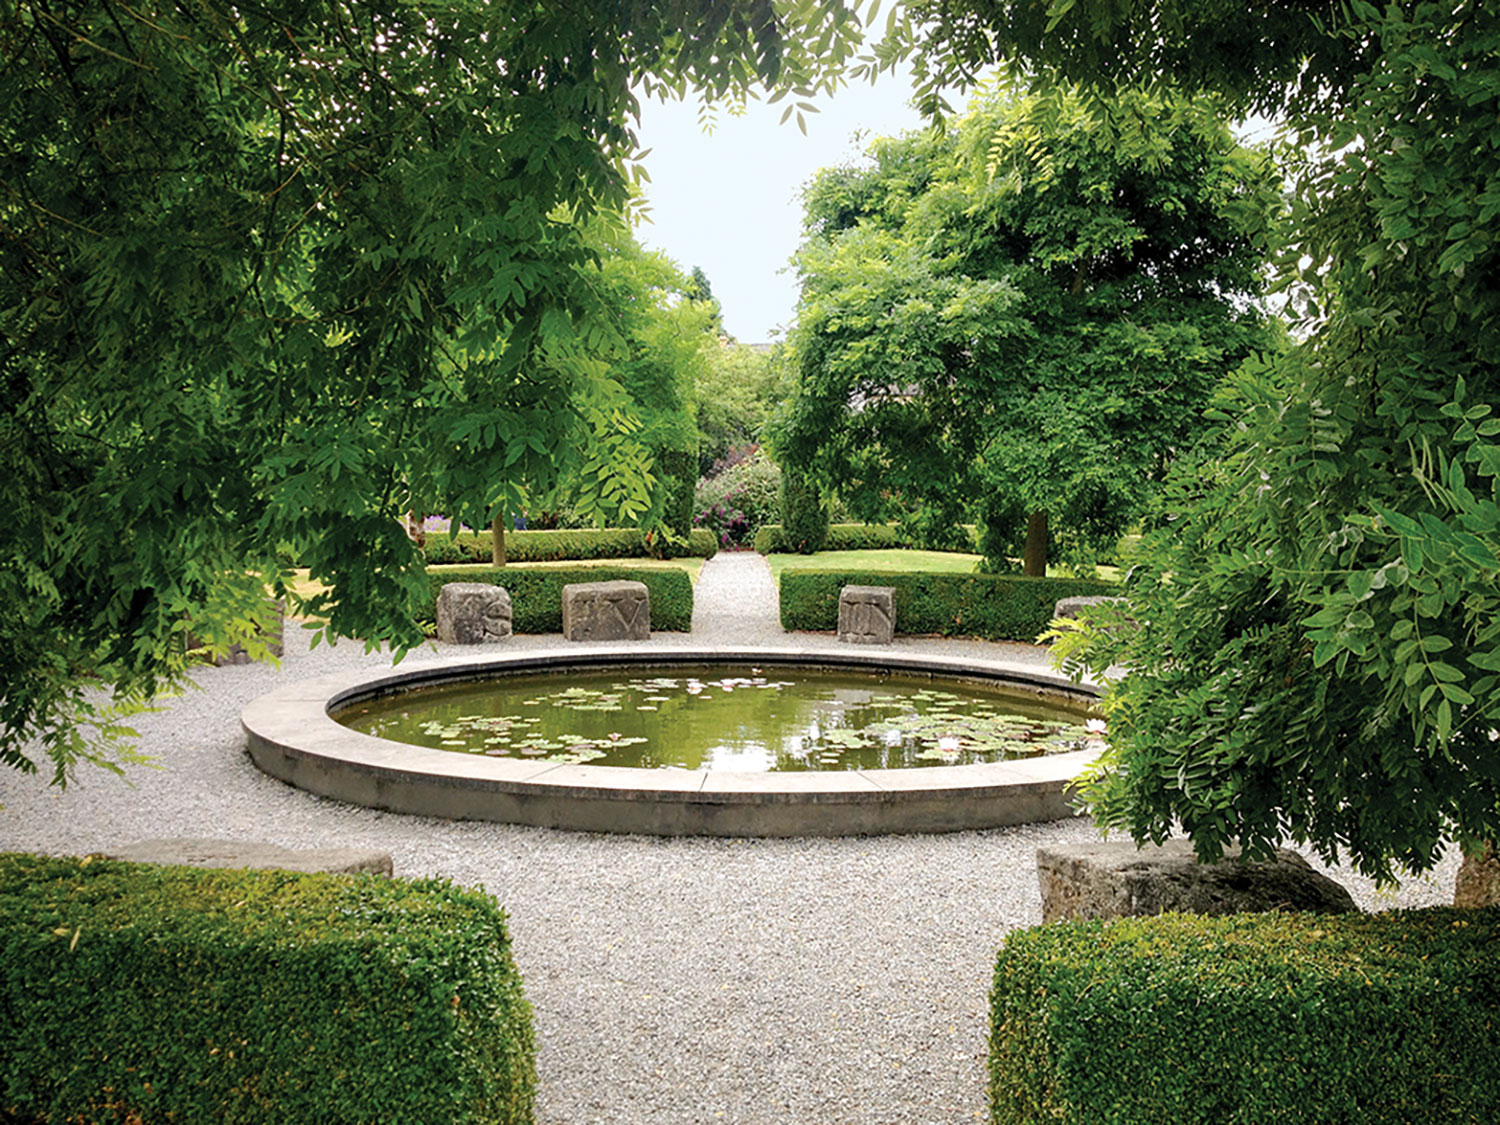 This Irish garden illustrates the style of designer Arthur Shackleton.